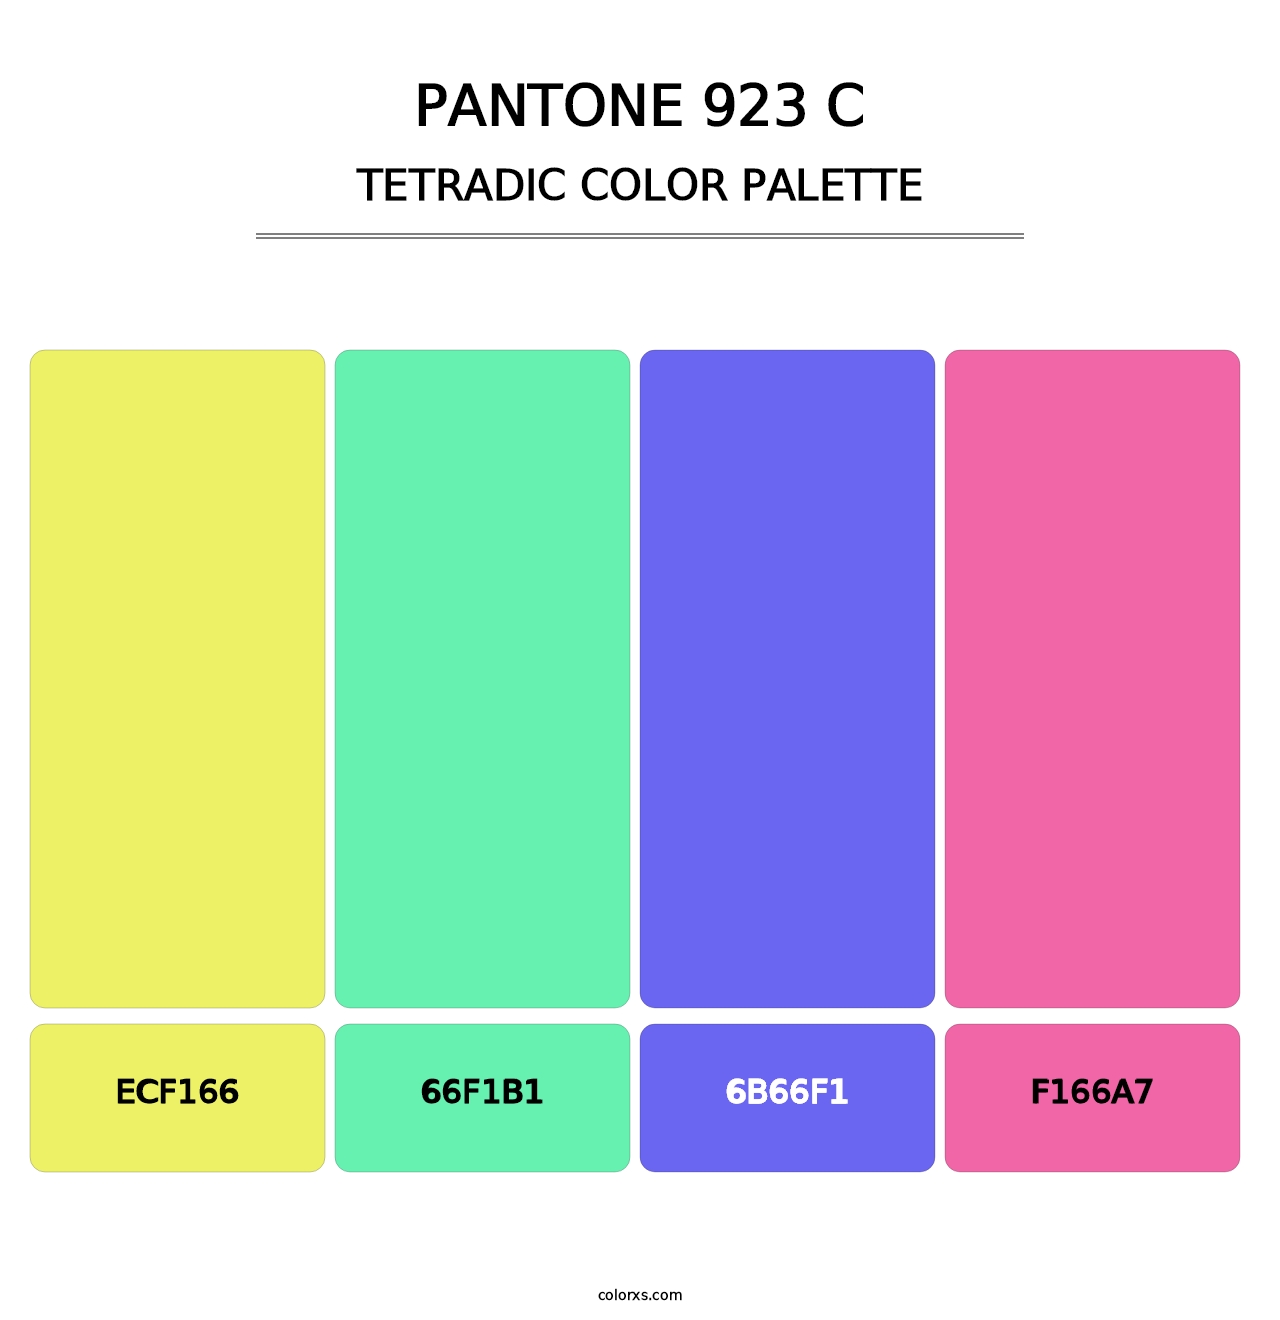 PANTONE 923 C - Tetradic Color Palette